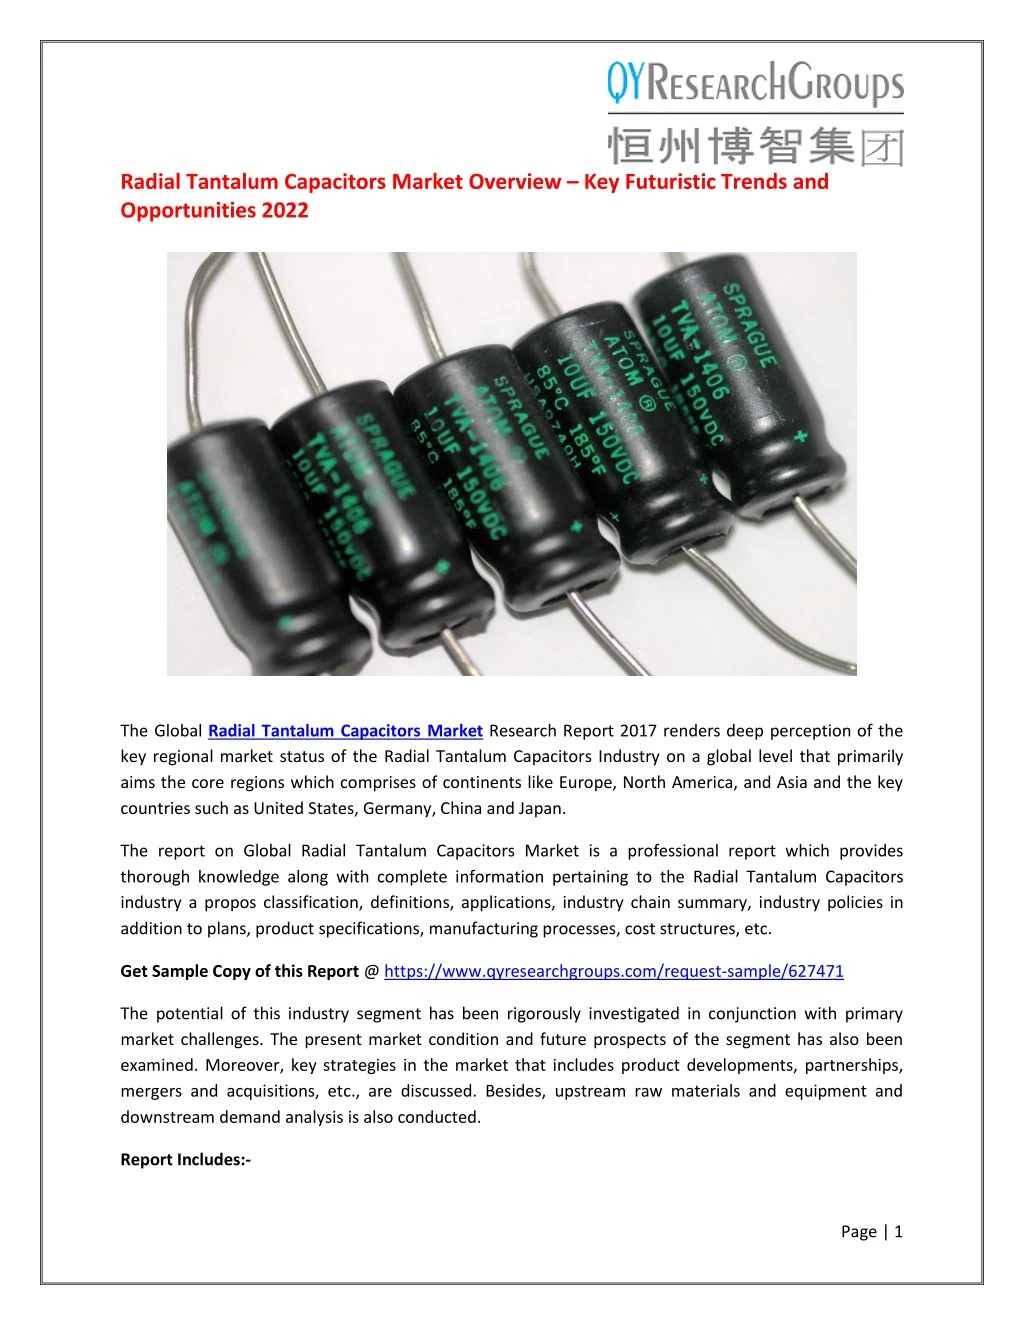 radial tantalum capacitors market overview